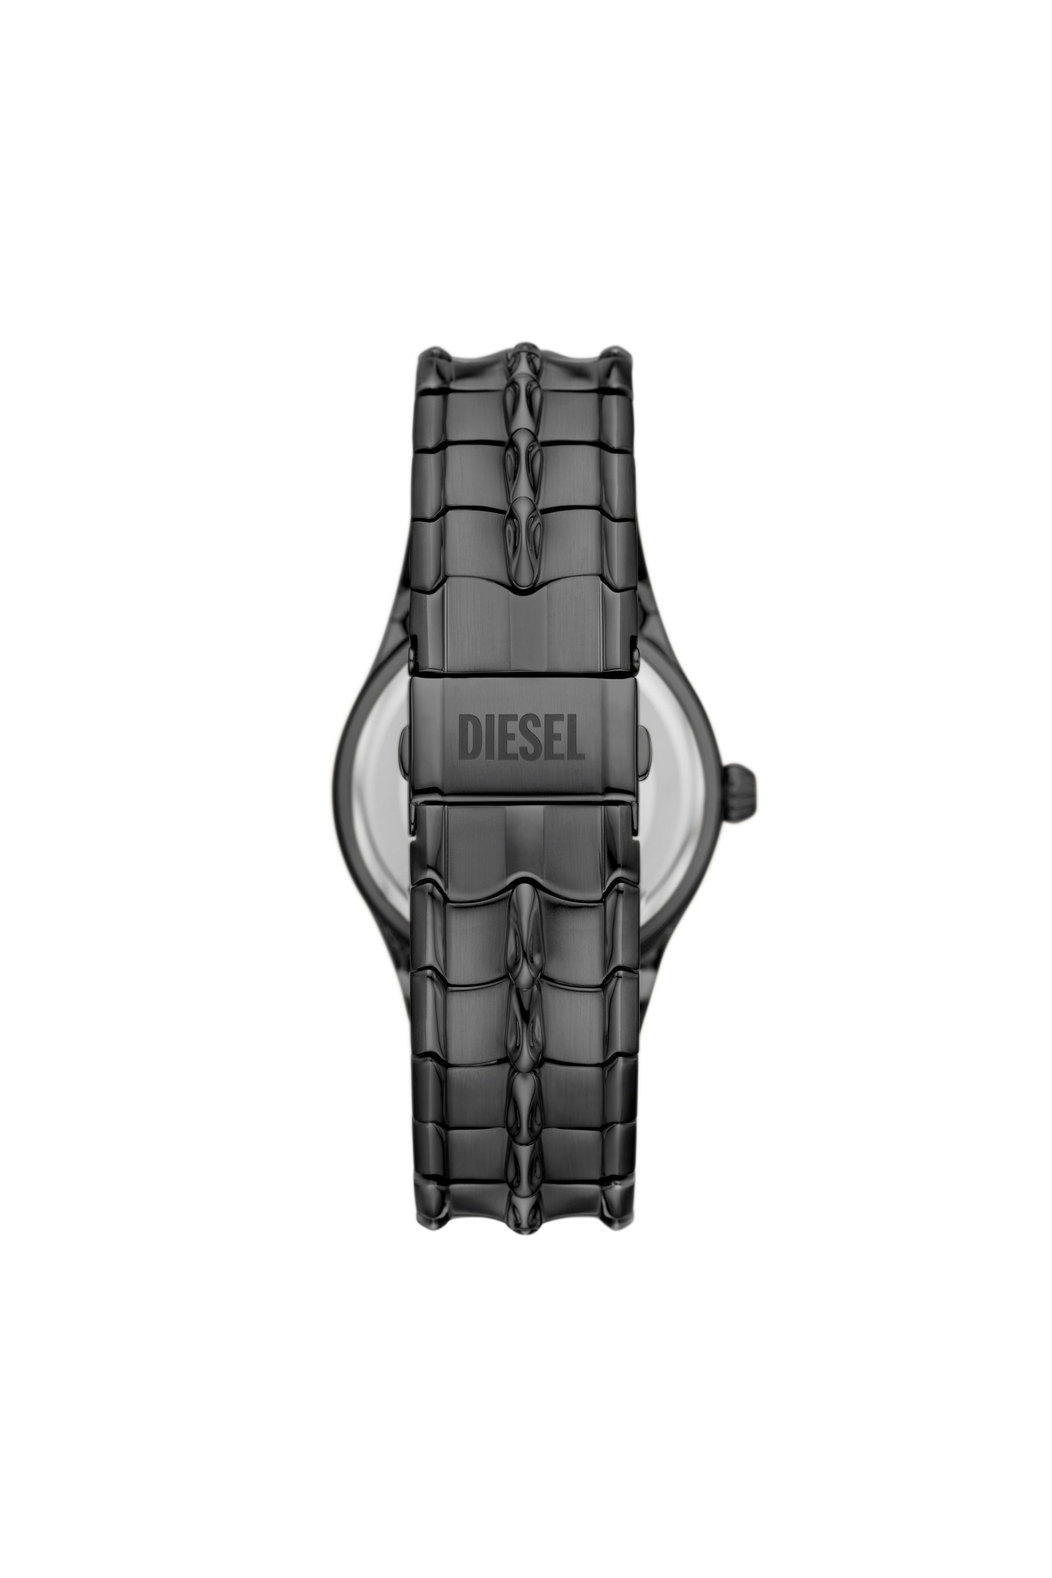 Diesel Vert Three-Hand Date Gunmetal Stainless Steel Watch